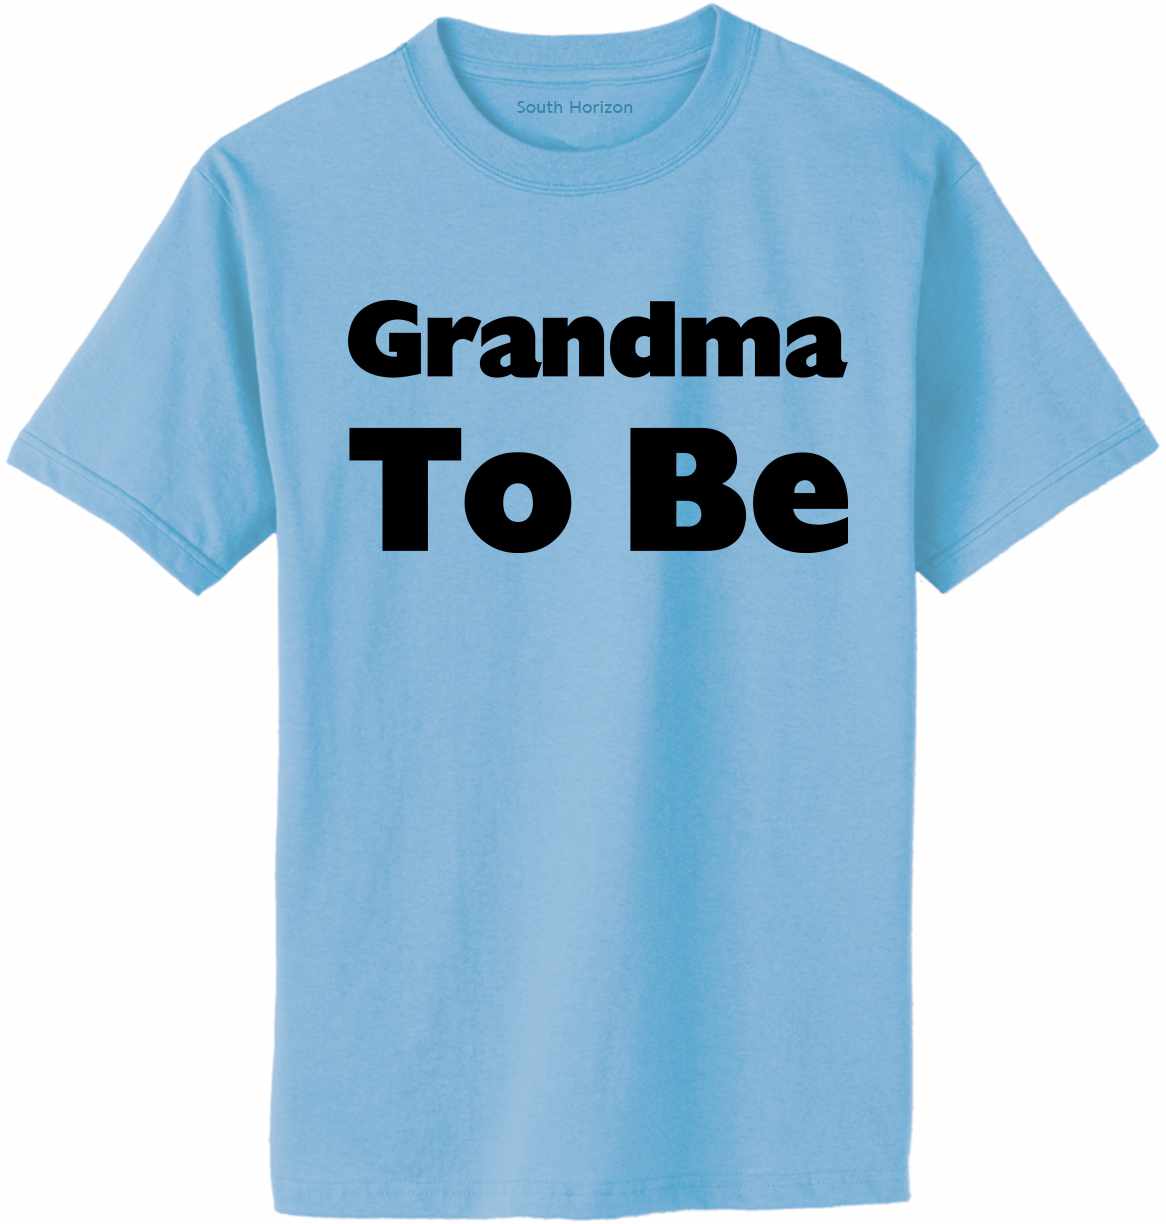 Grandma To Be on Adult T-Shirt (#726-1)